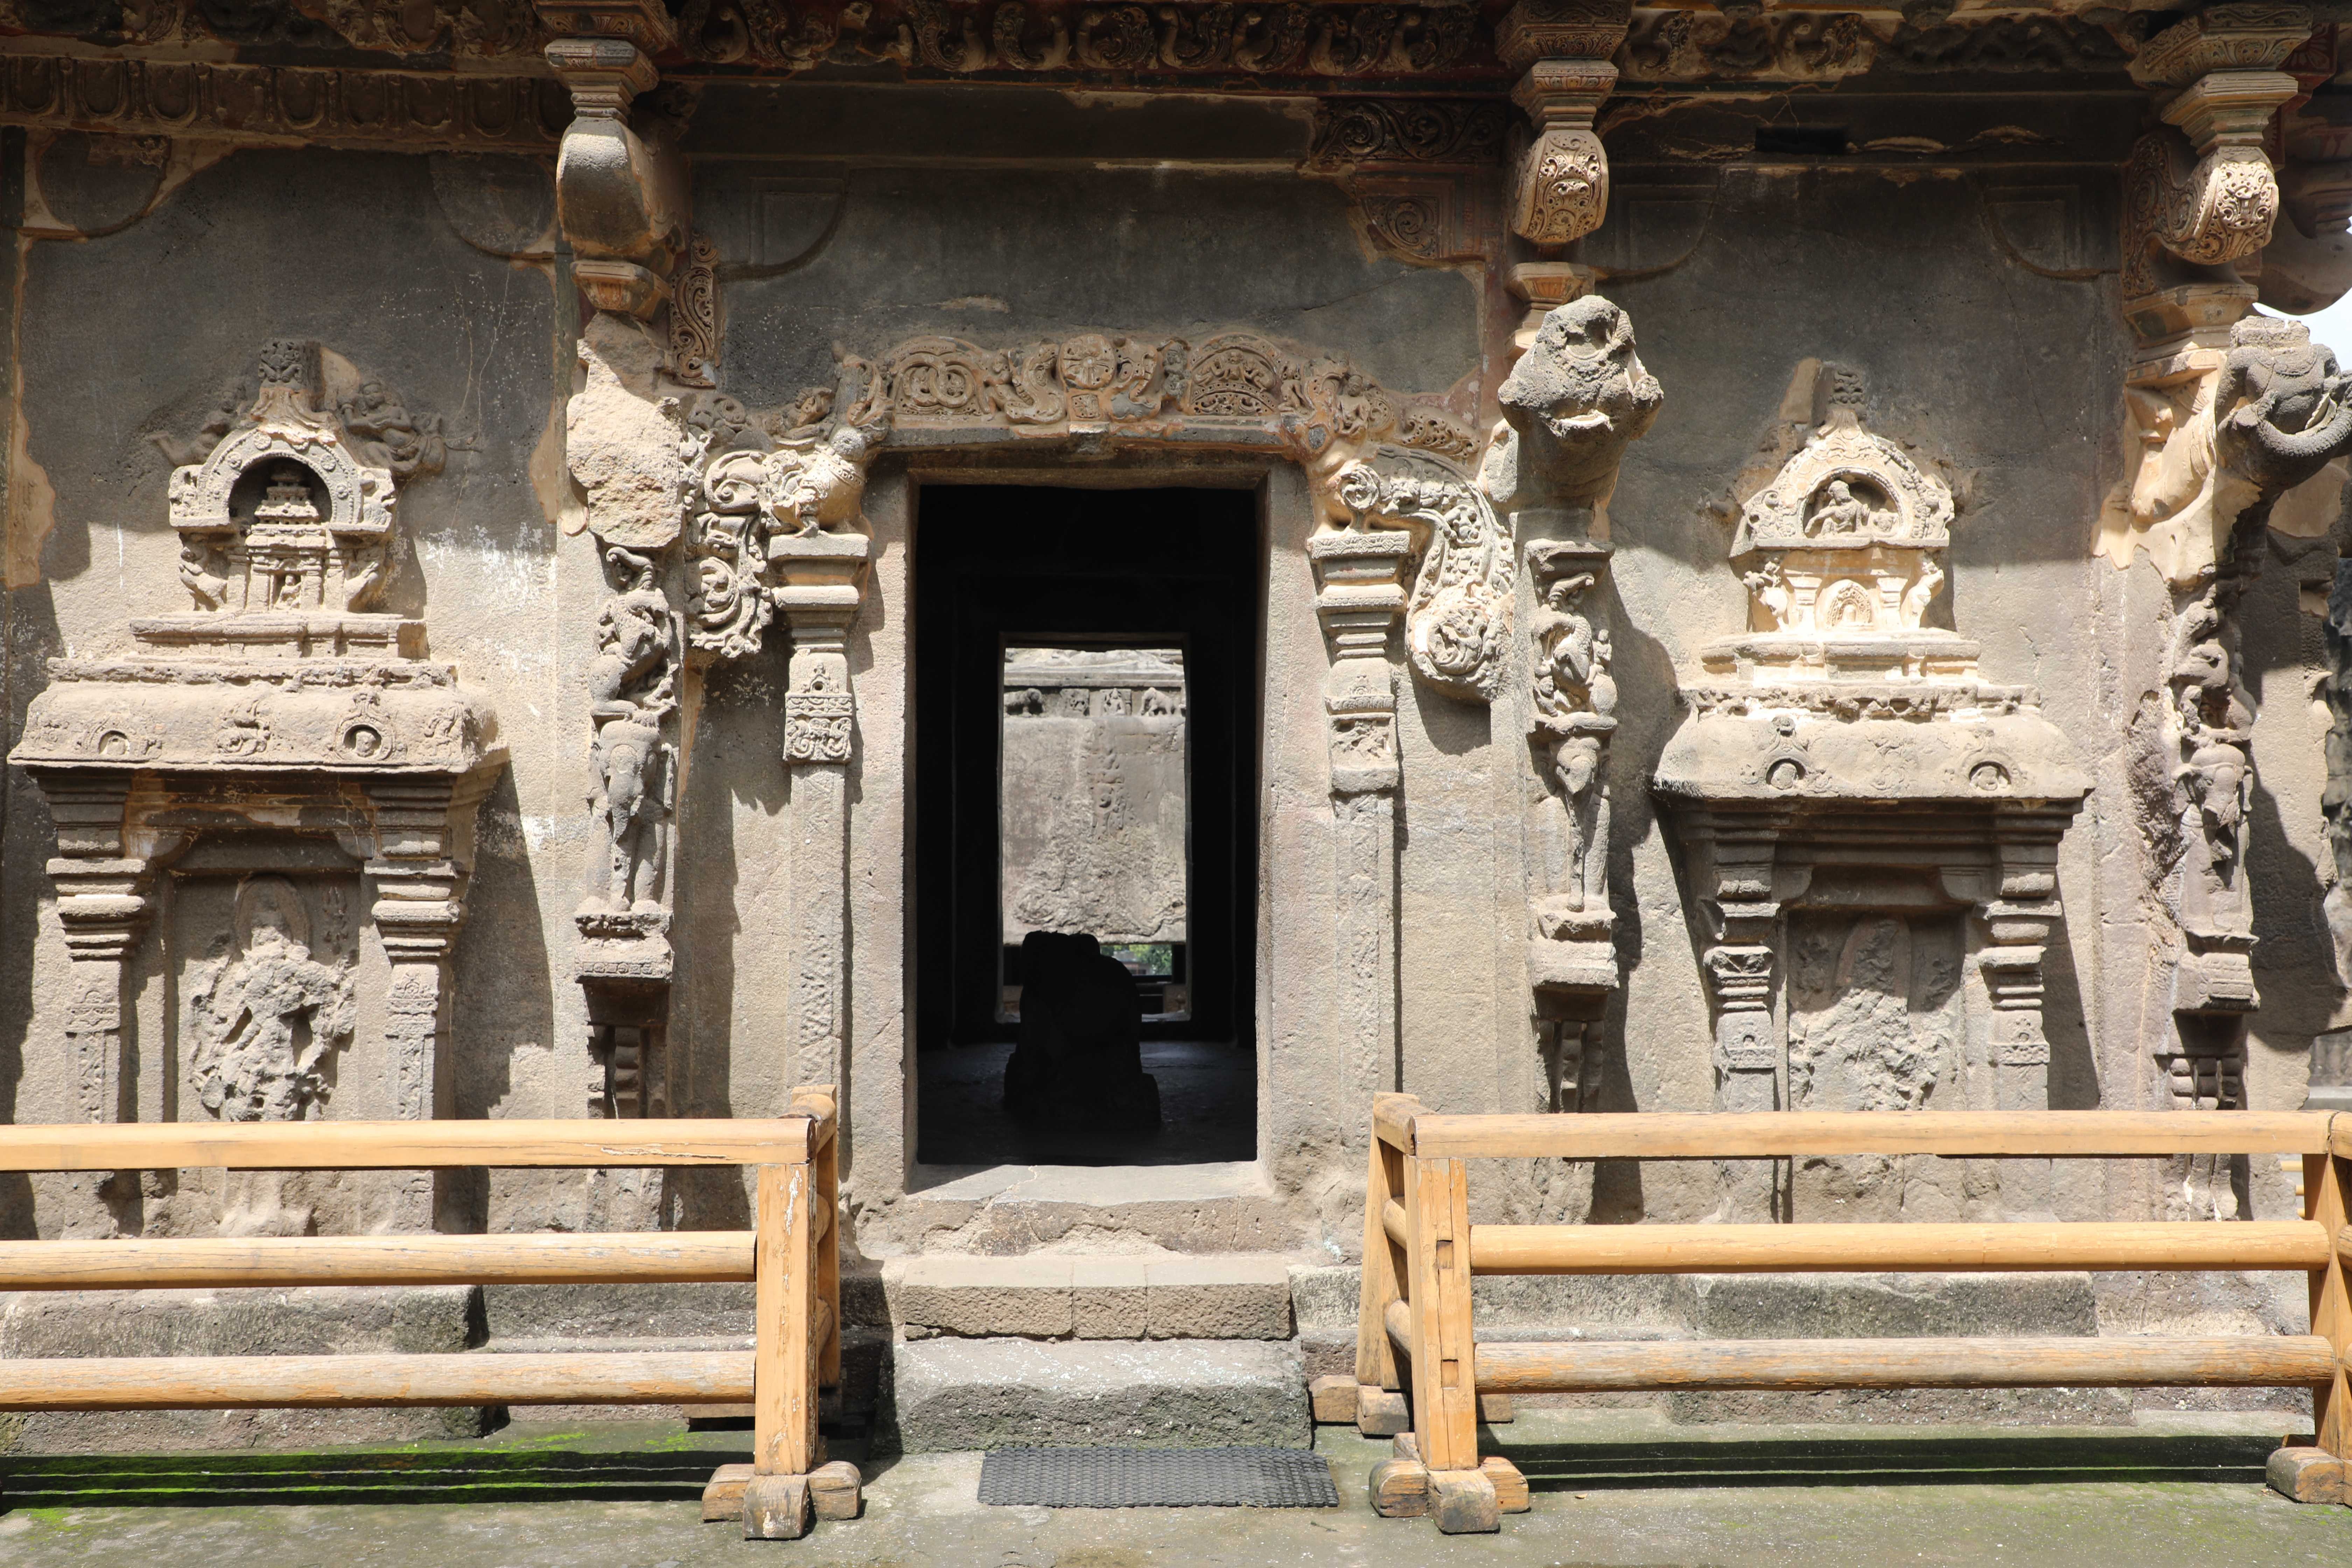 tourhub | Agora Voyages | Hyderabad to Aurangabad Drive to Explore the Man-made Wonder of India 